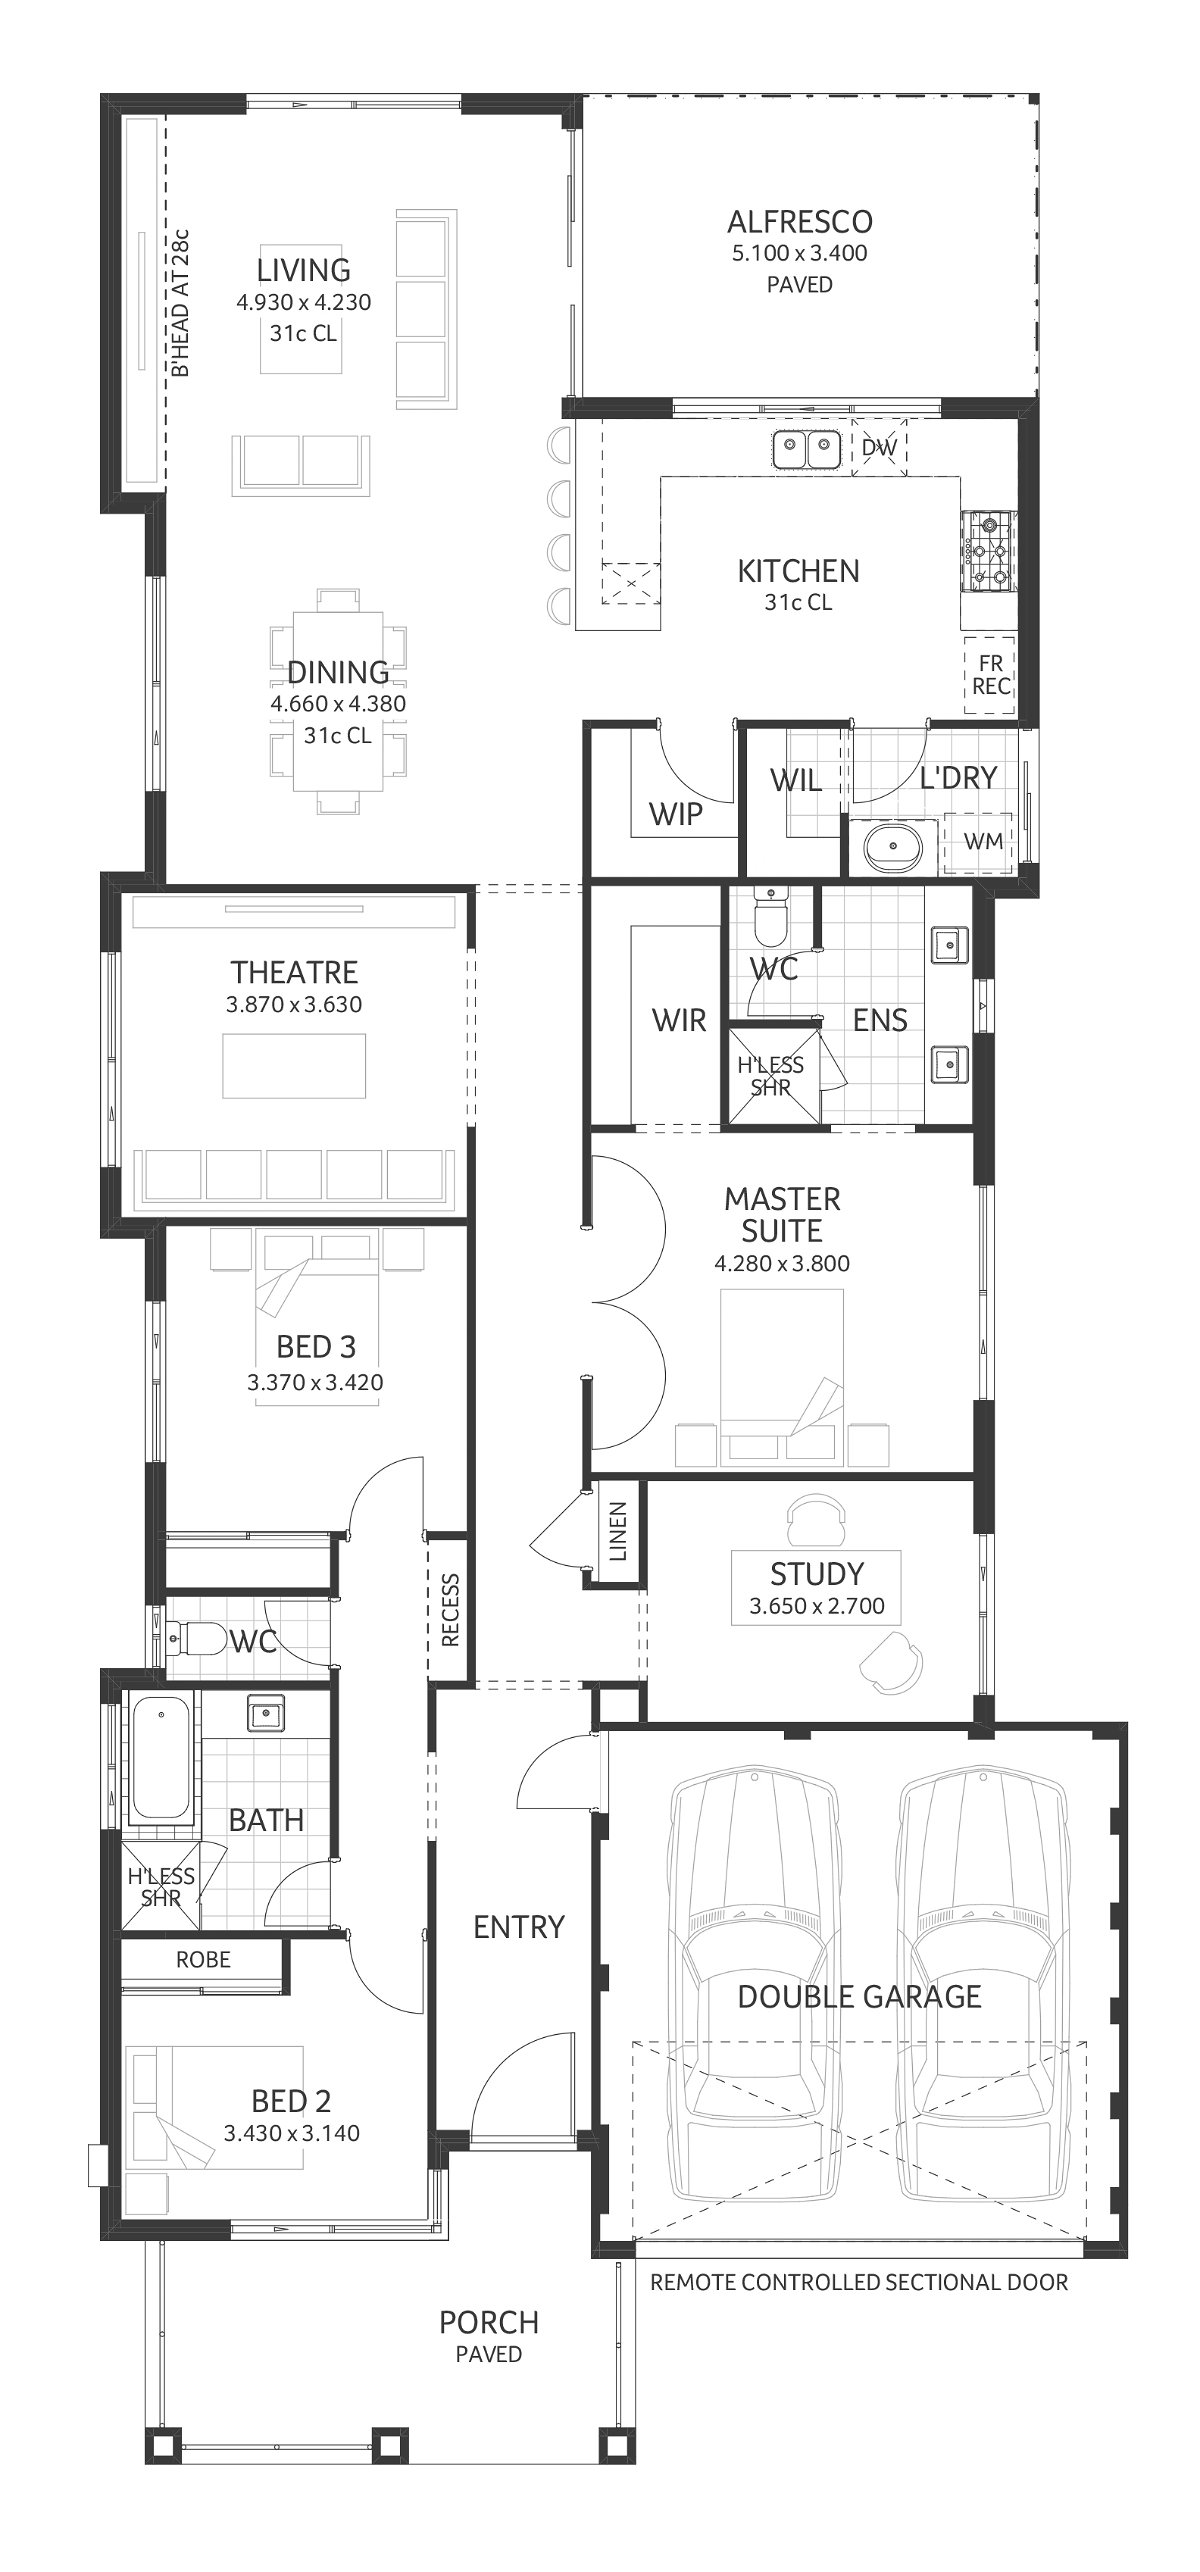 Plunkett Homes - Gracetown | Hamptons - Floorplan - Gracetown Luxe Hamptons Marketing Plan Croppedjpg